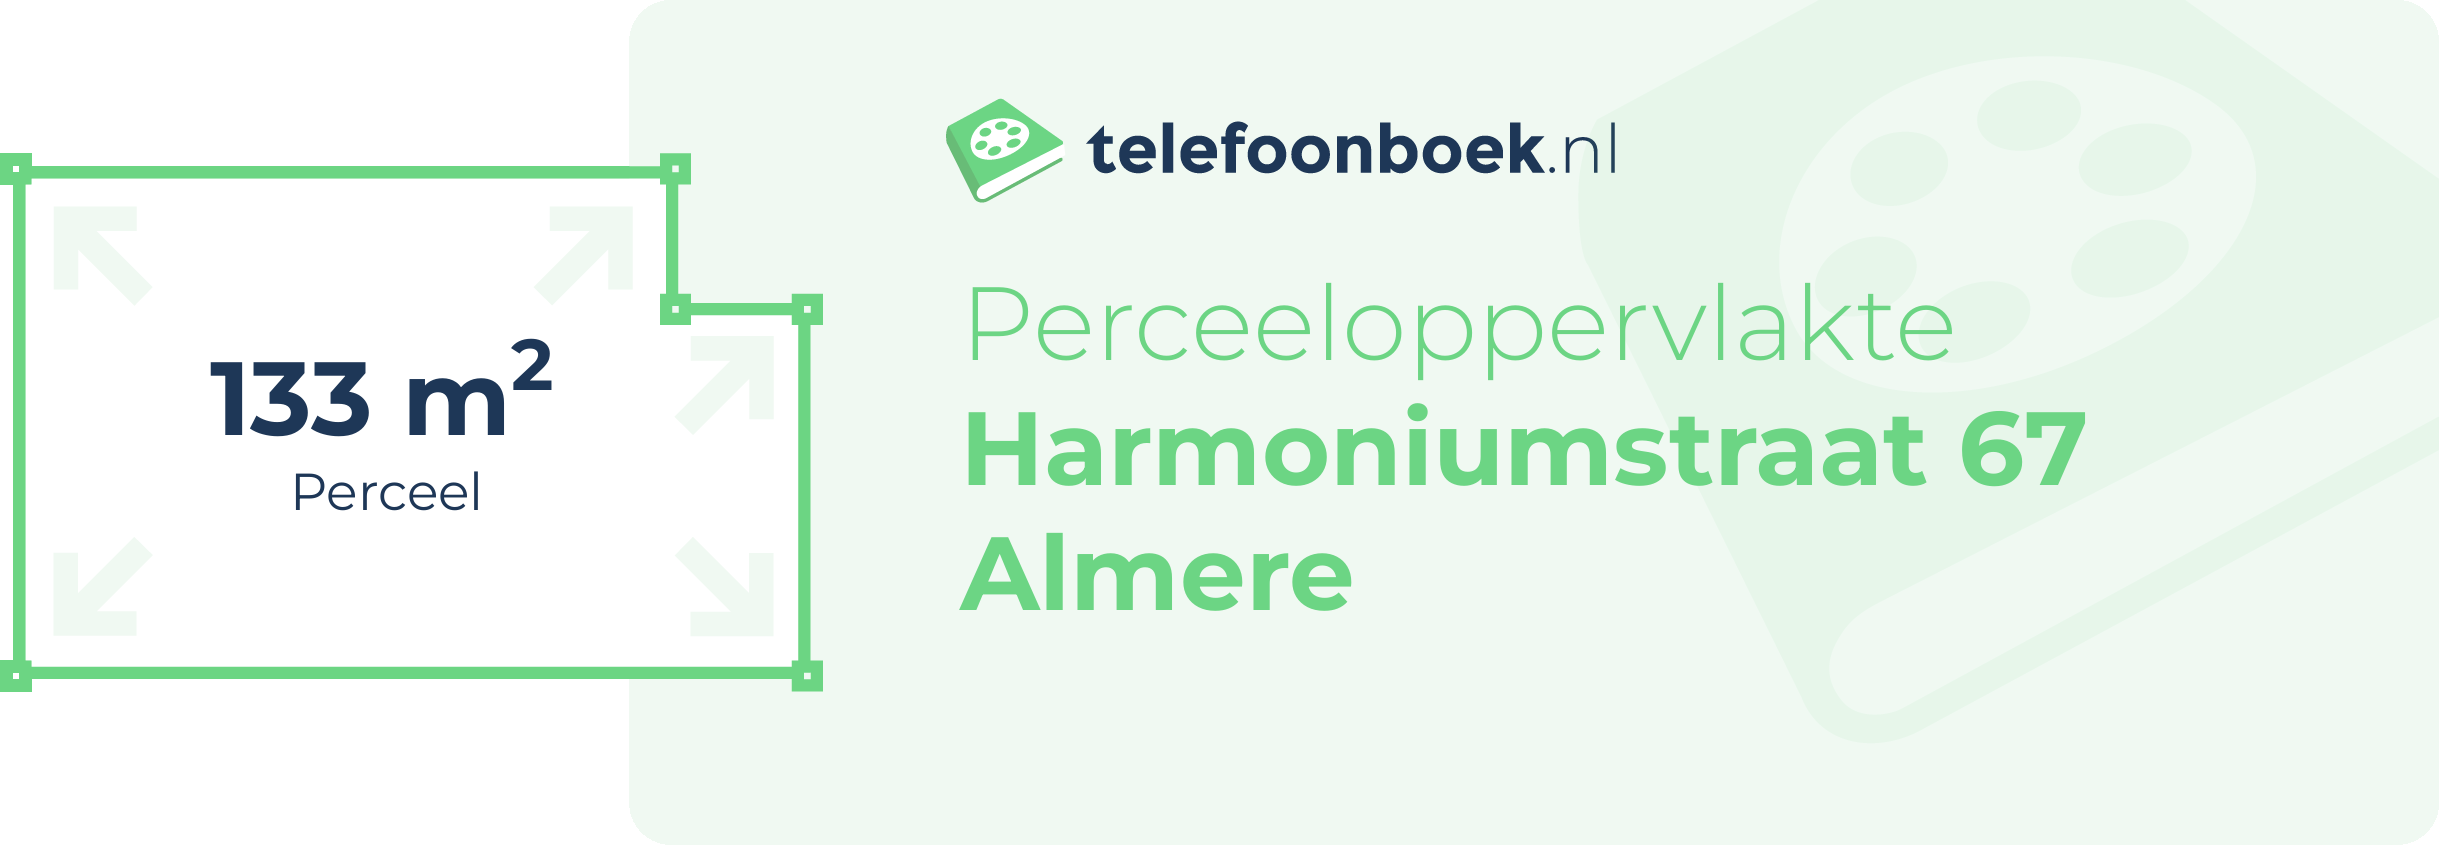 Perceeloppervlakte Harmoniumstraat 67 Almere